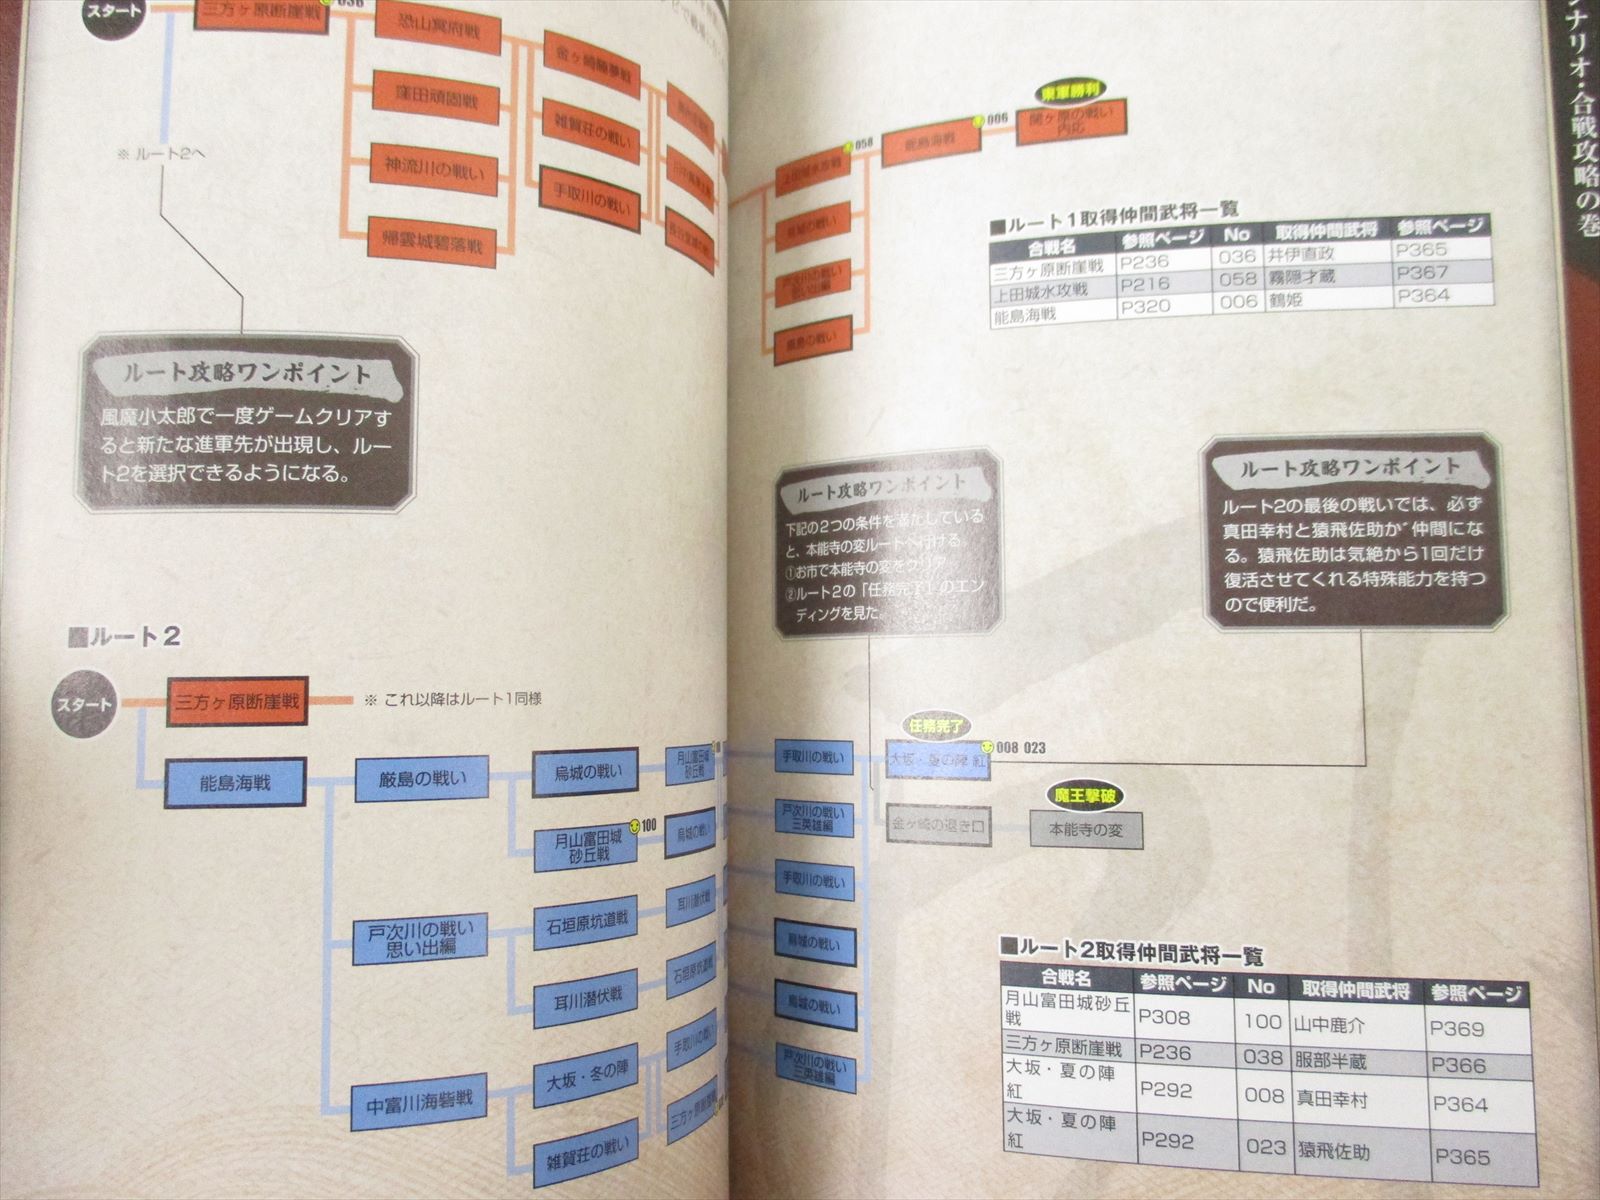 Sengoku Basara 3 Complete Guide Ps3 Wii Book Cp07 Condition C Ebay